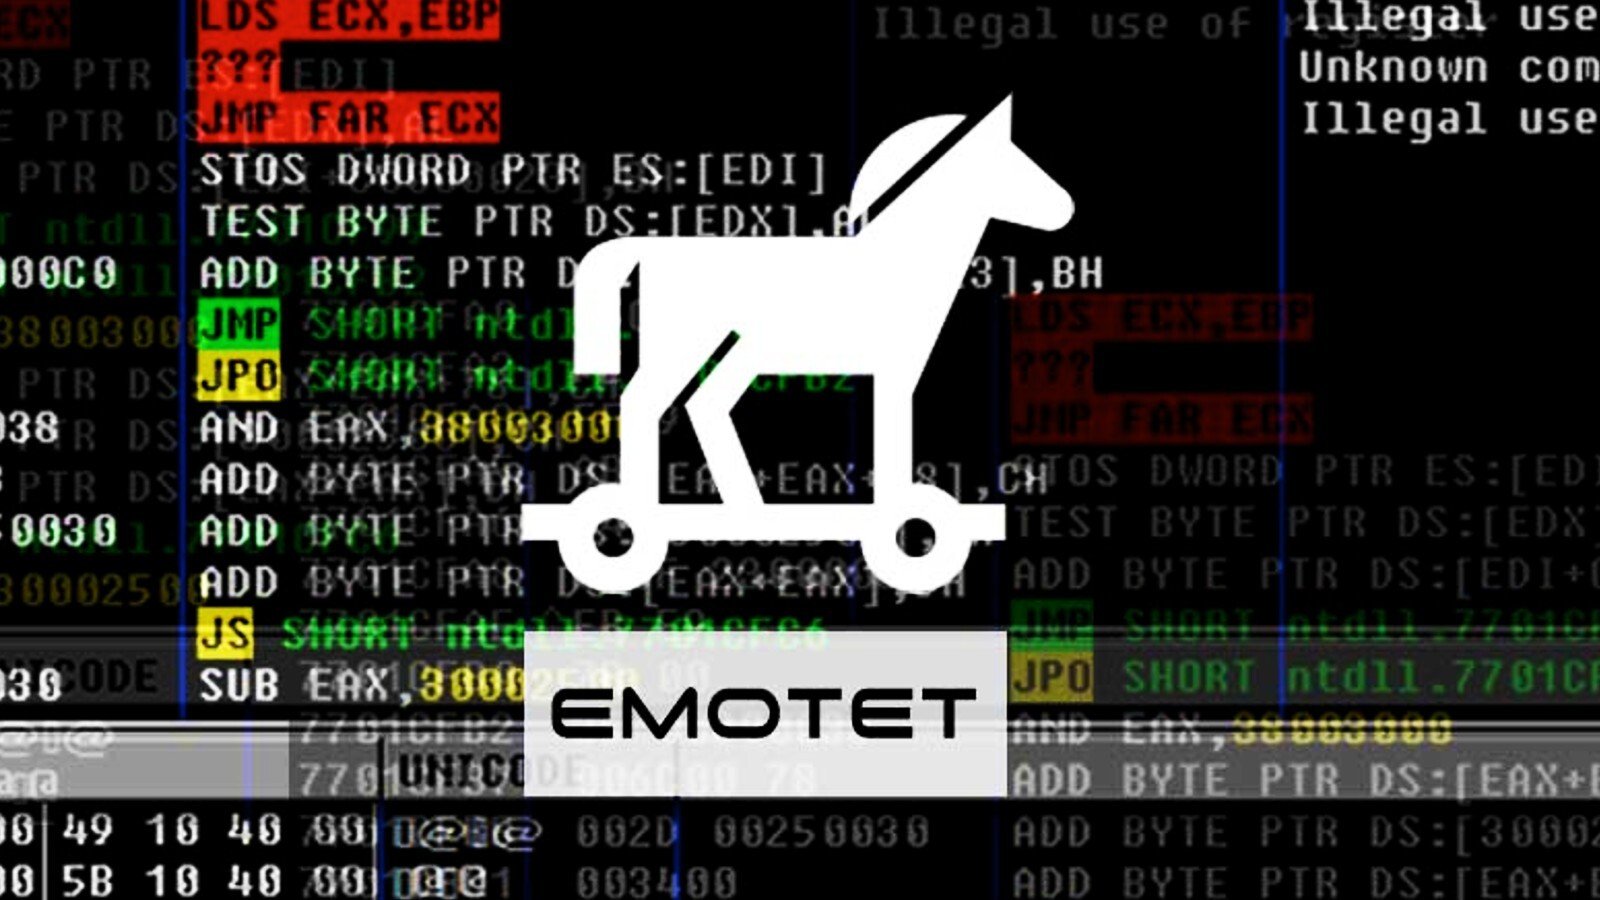 Emotet botnet switches to 64-bit modules, increases activity